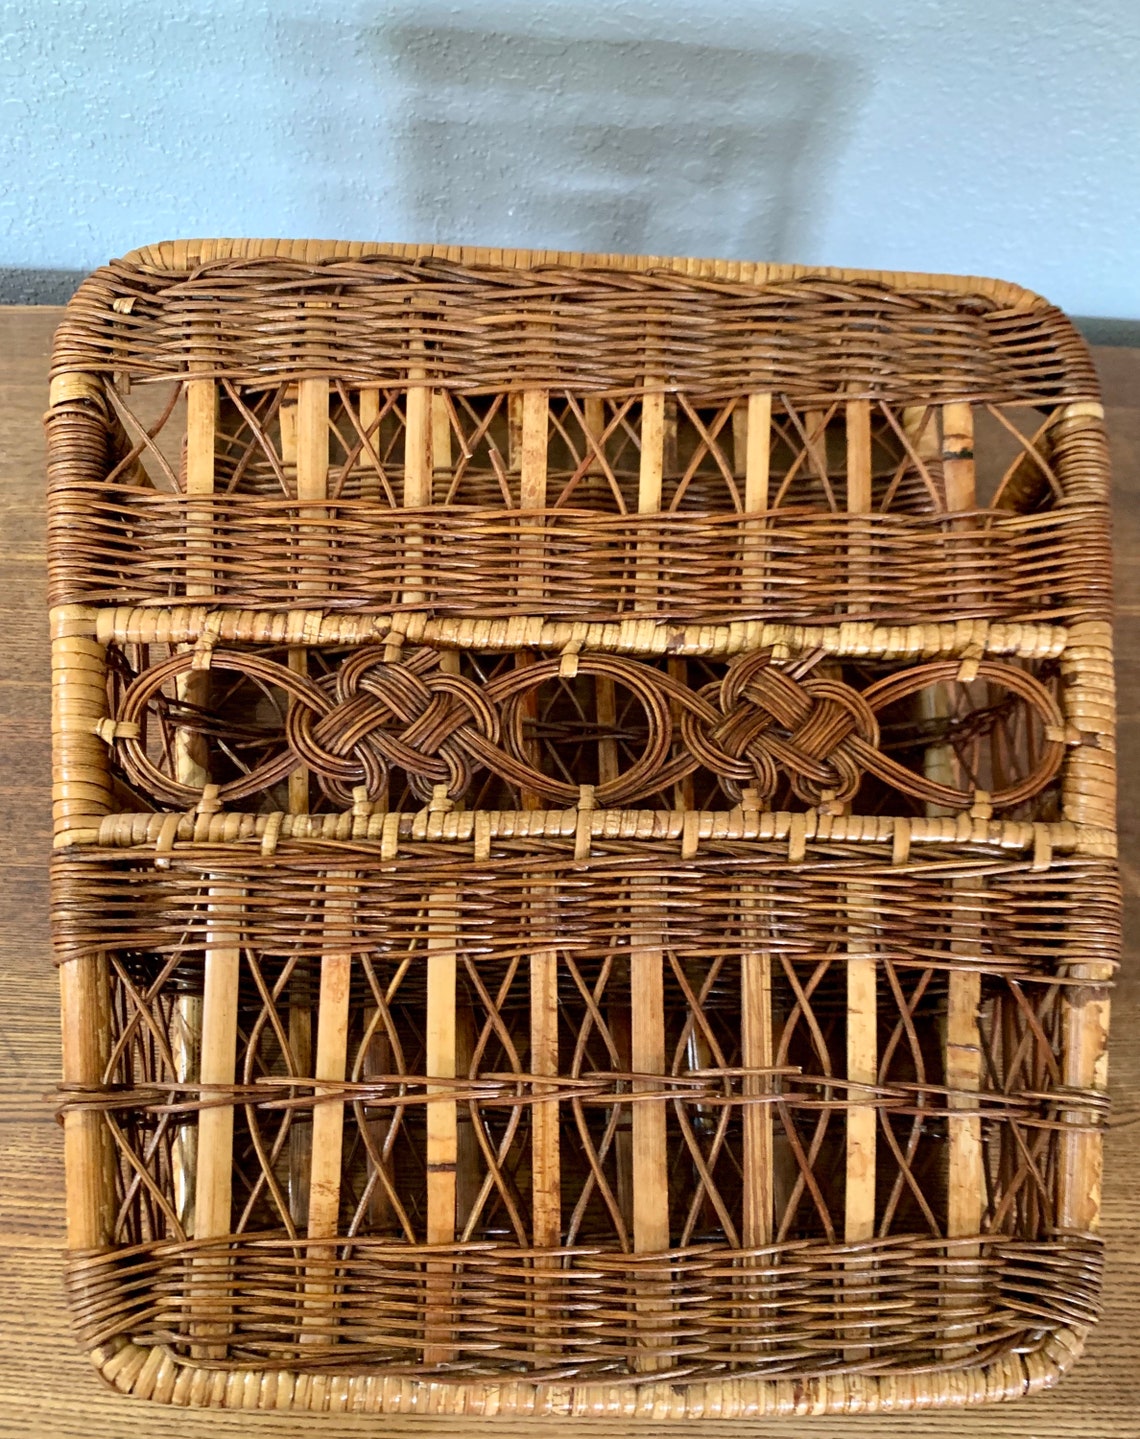 Antique Ratan/Wicker Basket Japandi Magazine Or Office Paper | Etsy